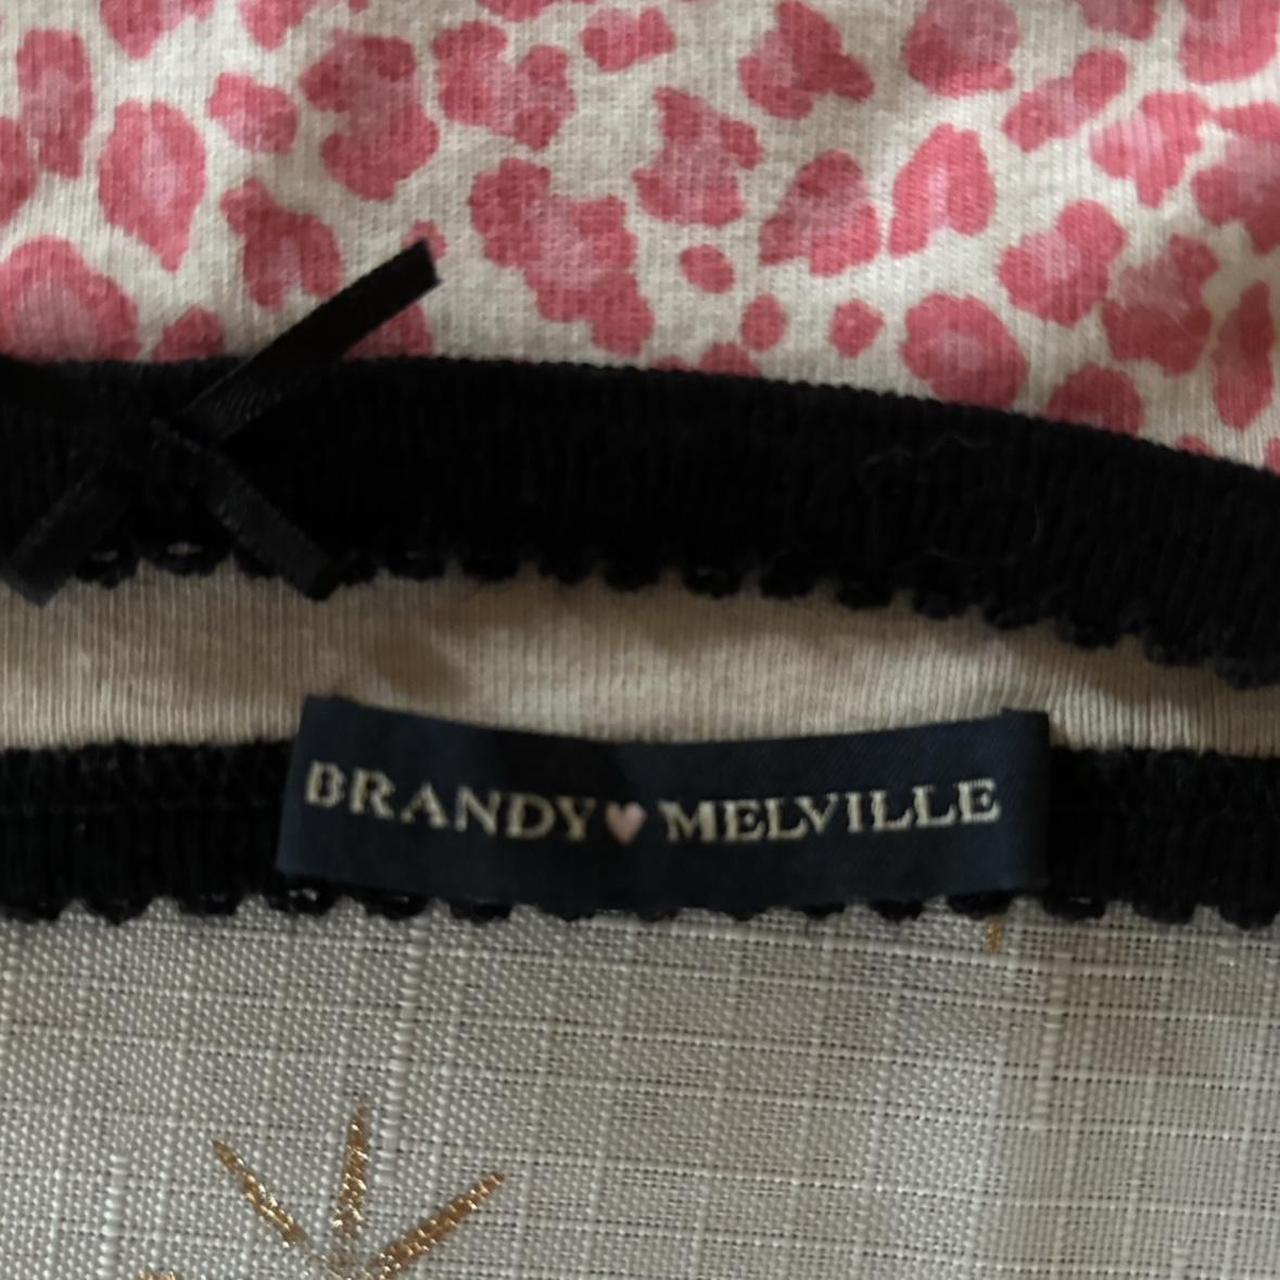 Brandy Melville Tank ⭐️ #brandymelville #brandygirl... - Depop